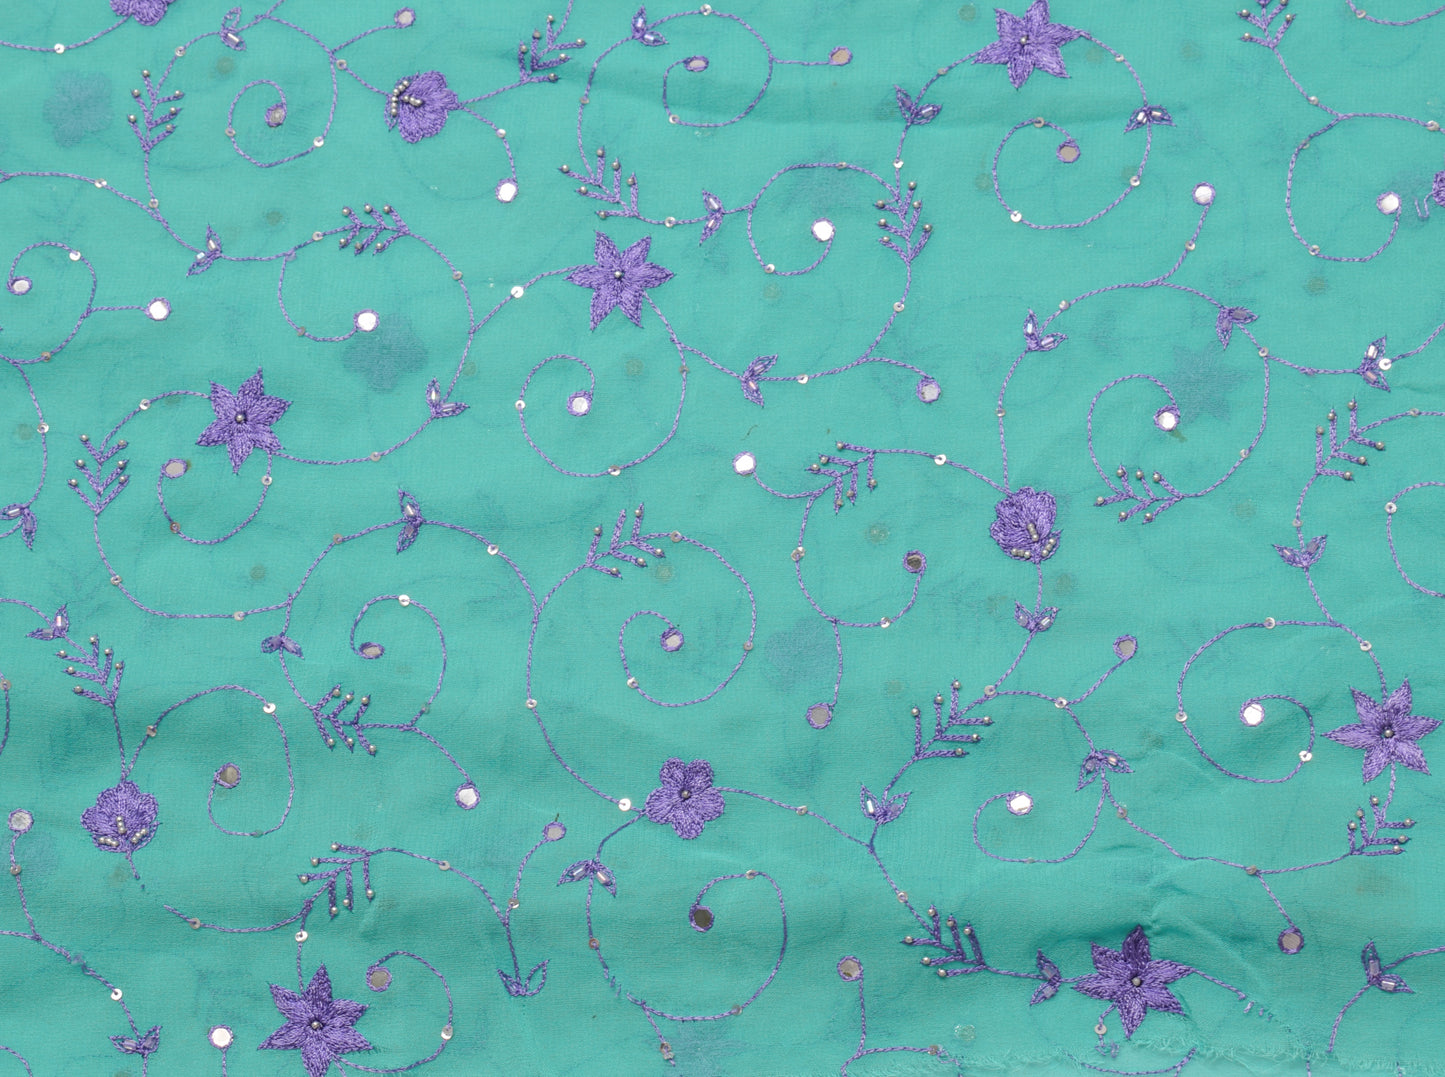 Sushila Vintage Turquoise Sari Remnant Scrap Georgette Embroidered Craft Fabric